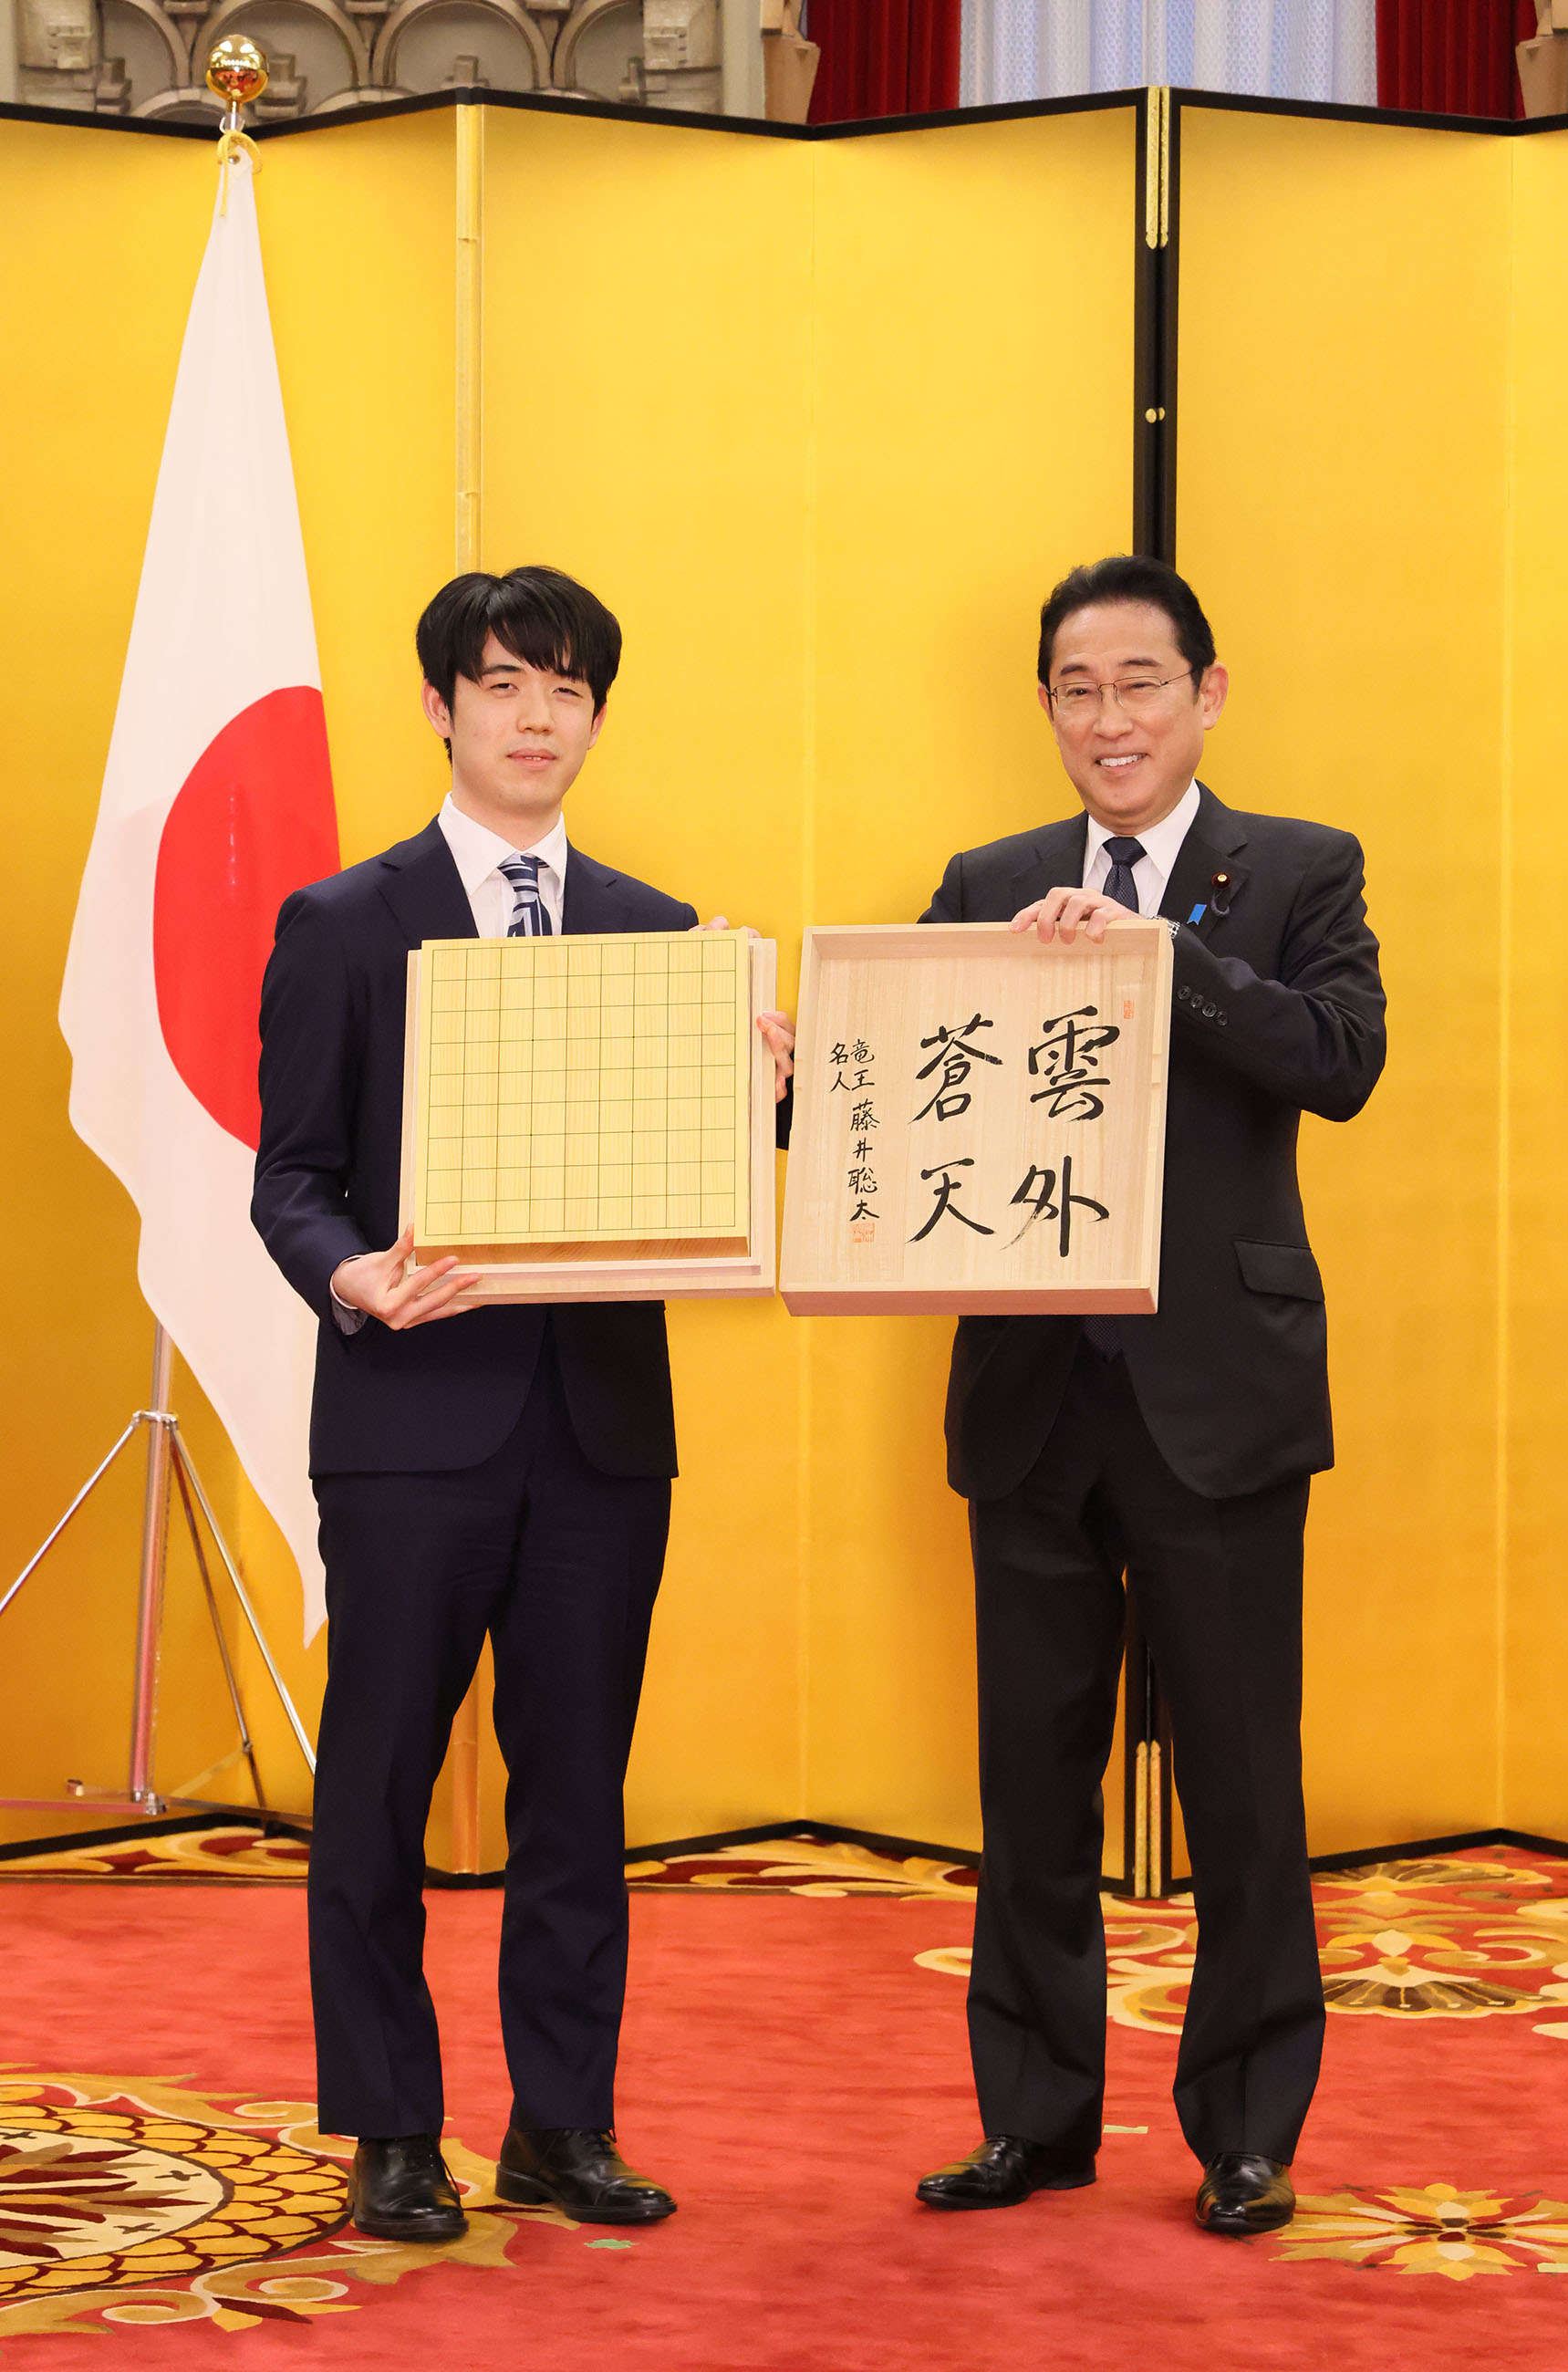 Prime Minister Kishida receiving a gift in return (3)